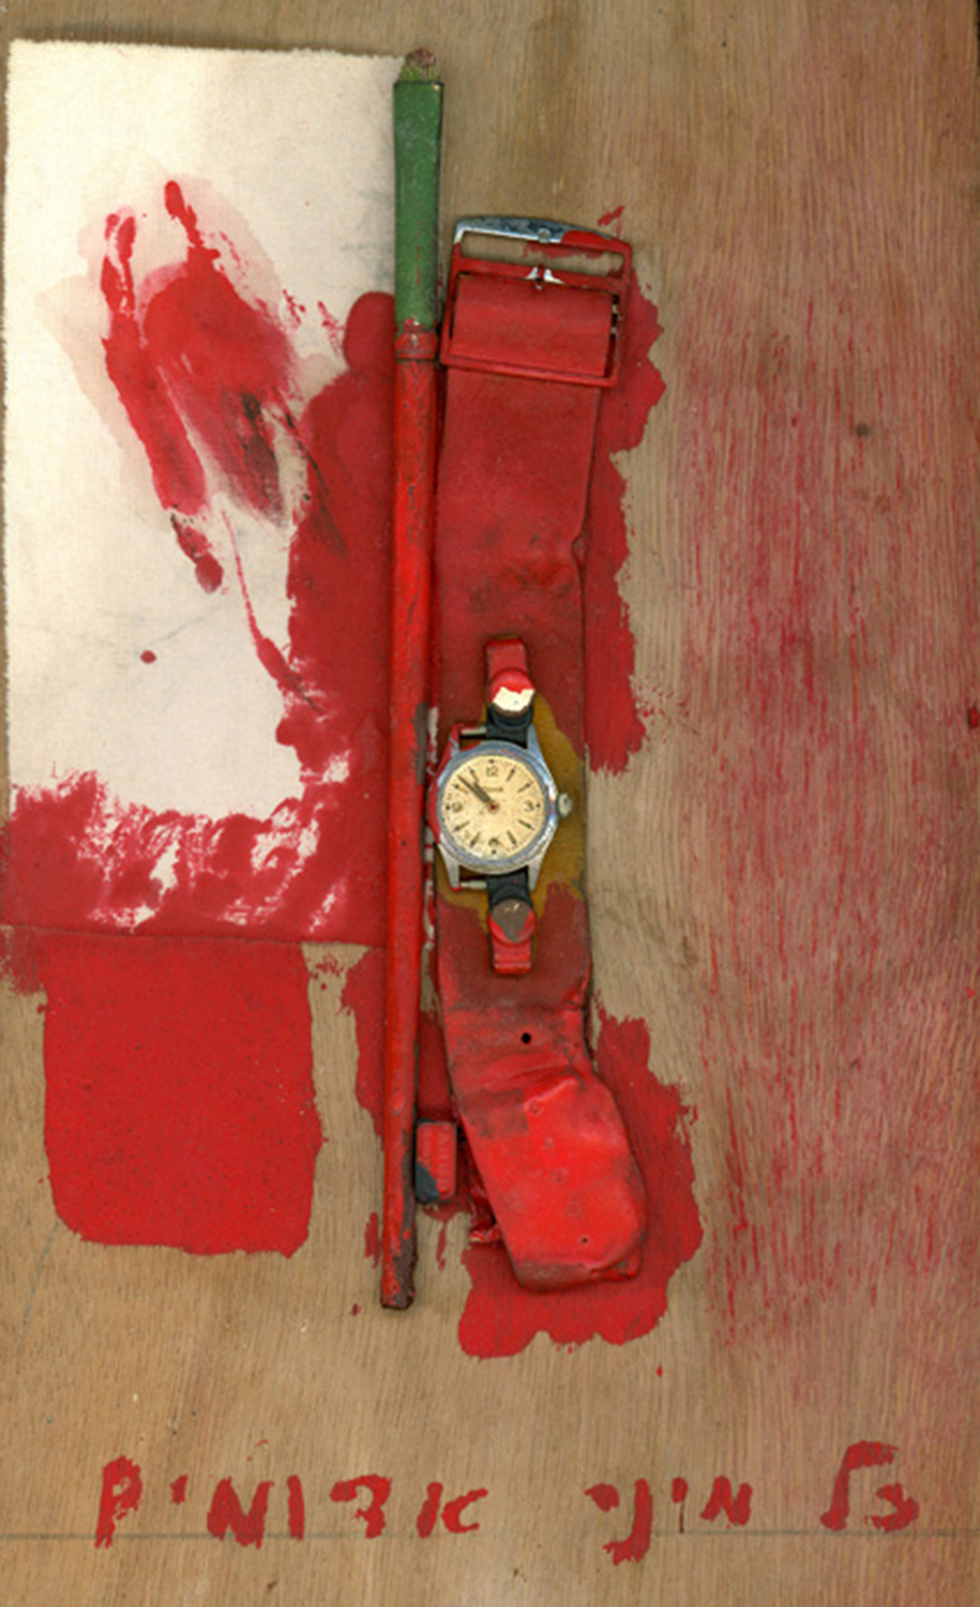 All Sort of Red, 1979 (מאת משה גרשוני) (מאת משה גרשוני)